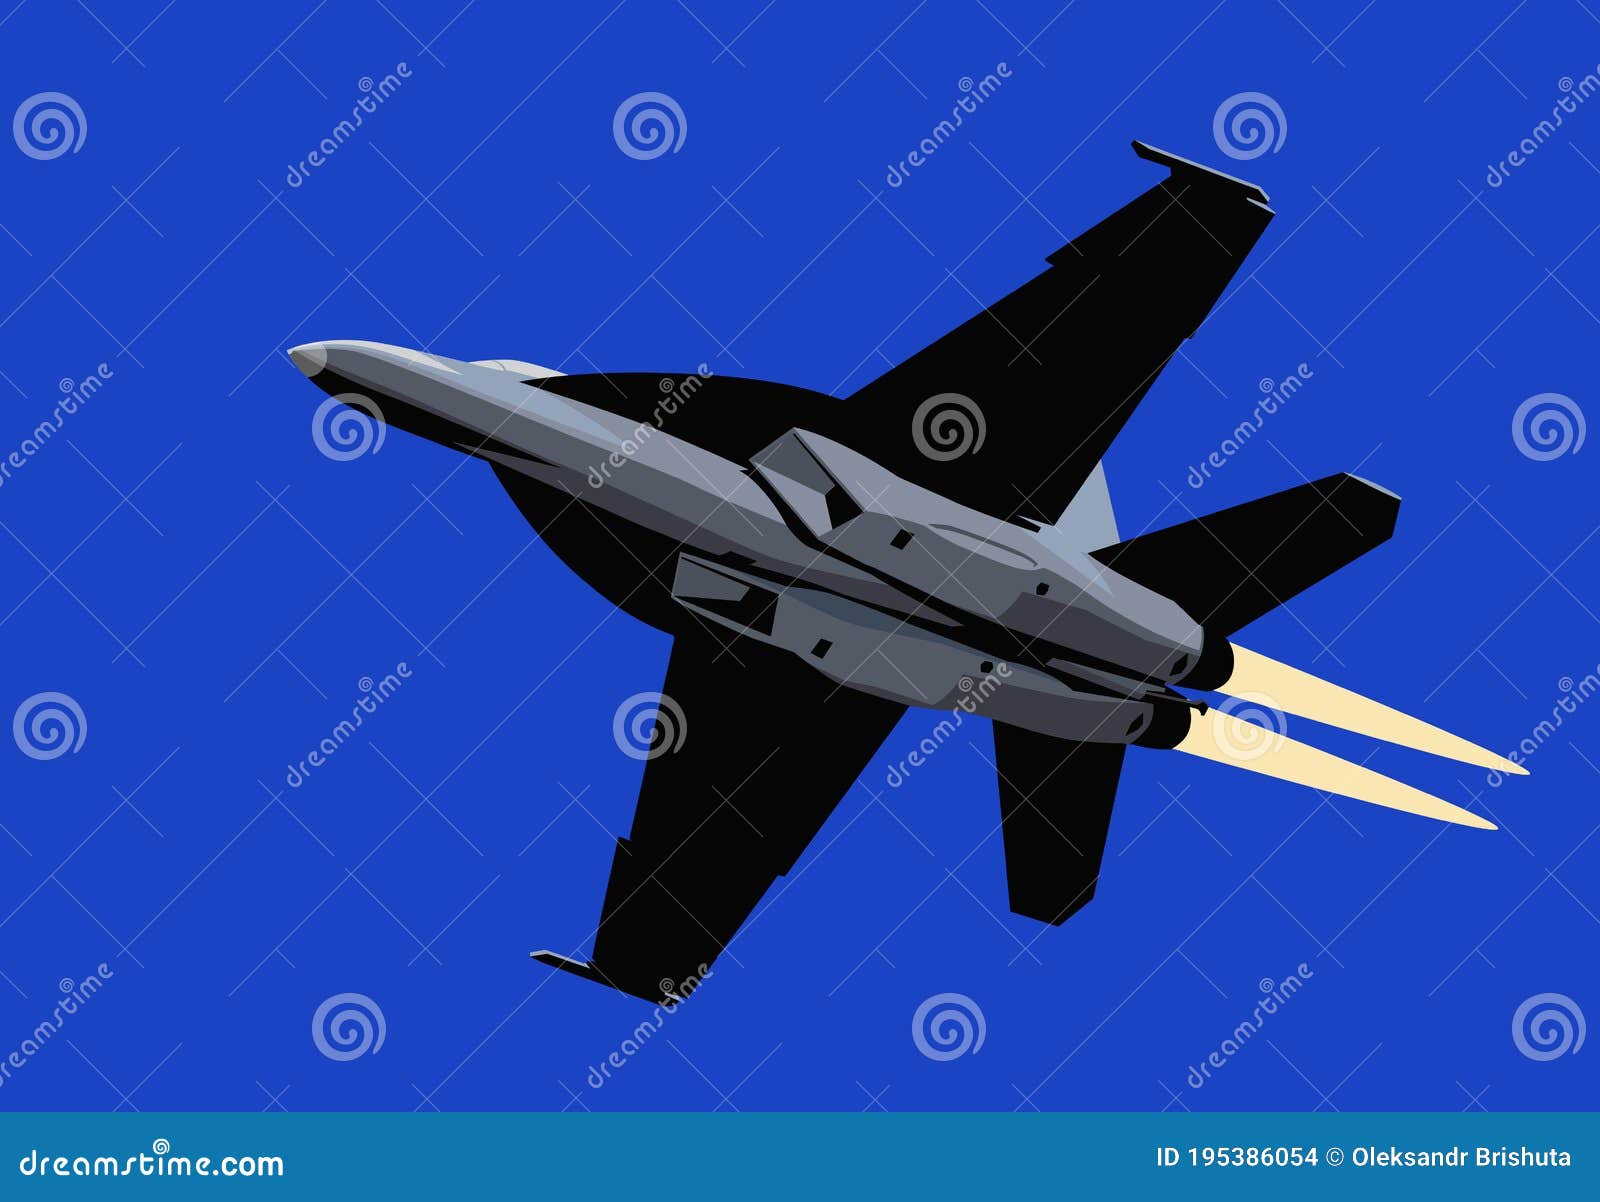 boeing f-18e super hornet. air power. afterburner navy jet fighter.